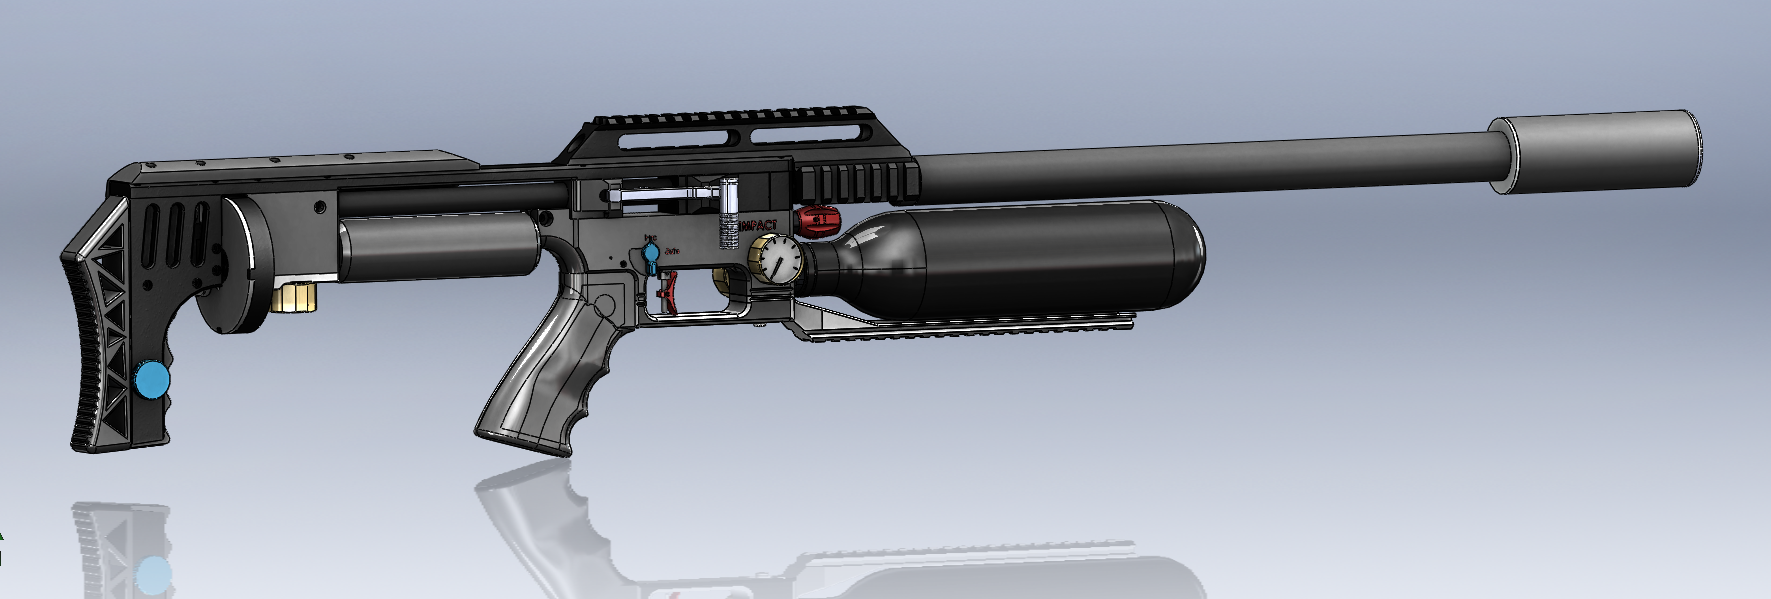 FXM3玩具气枪模型